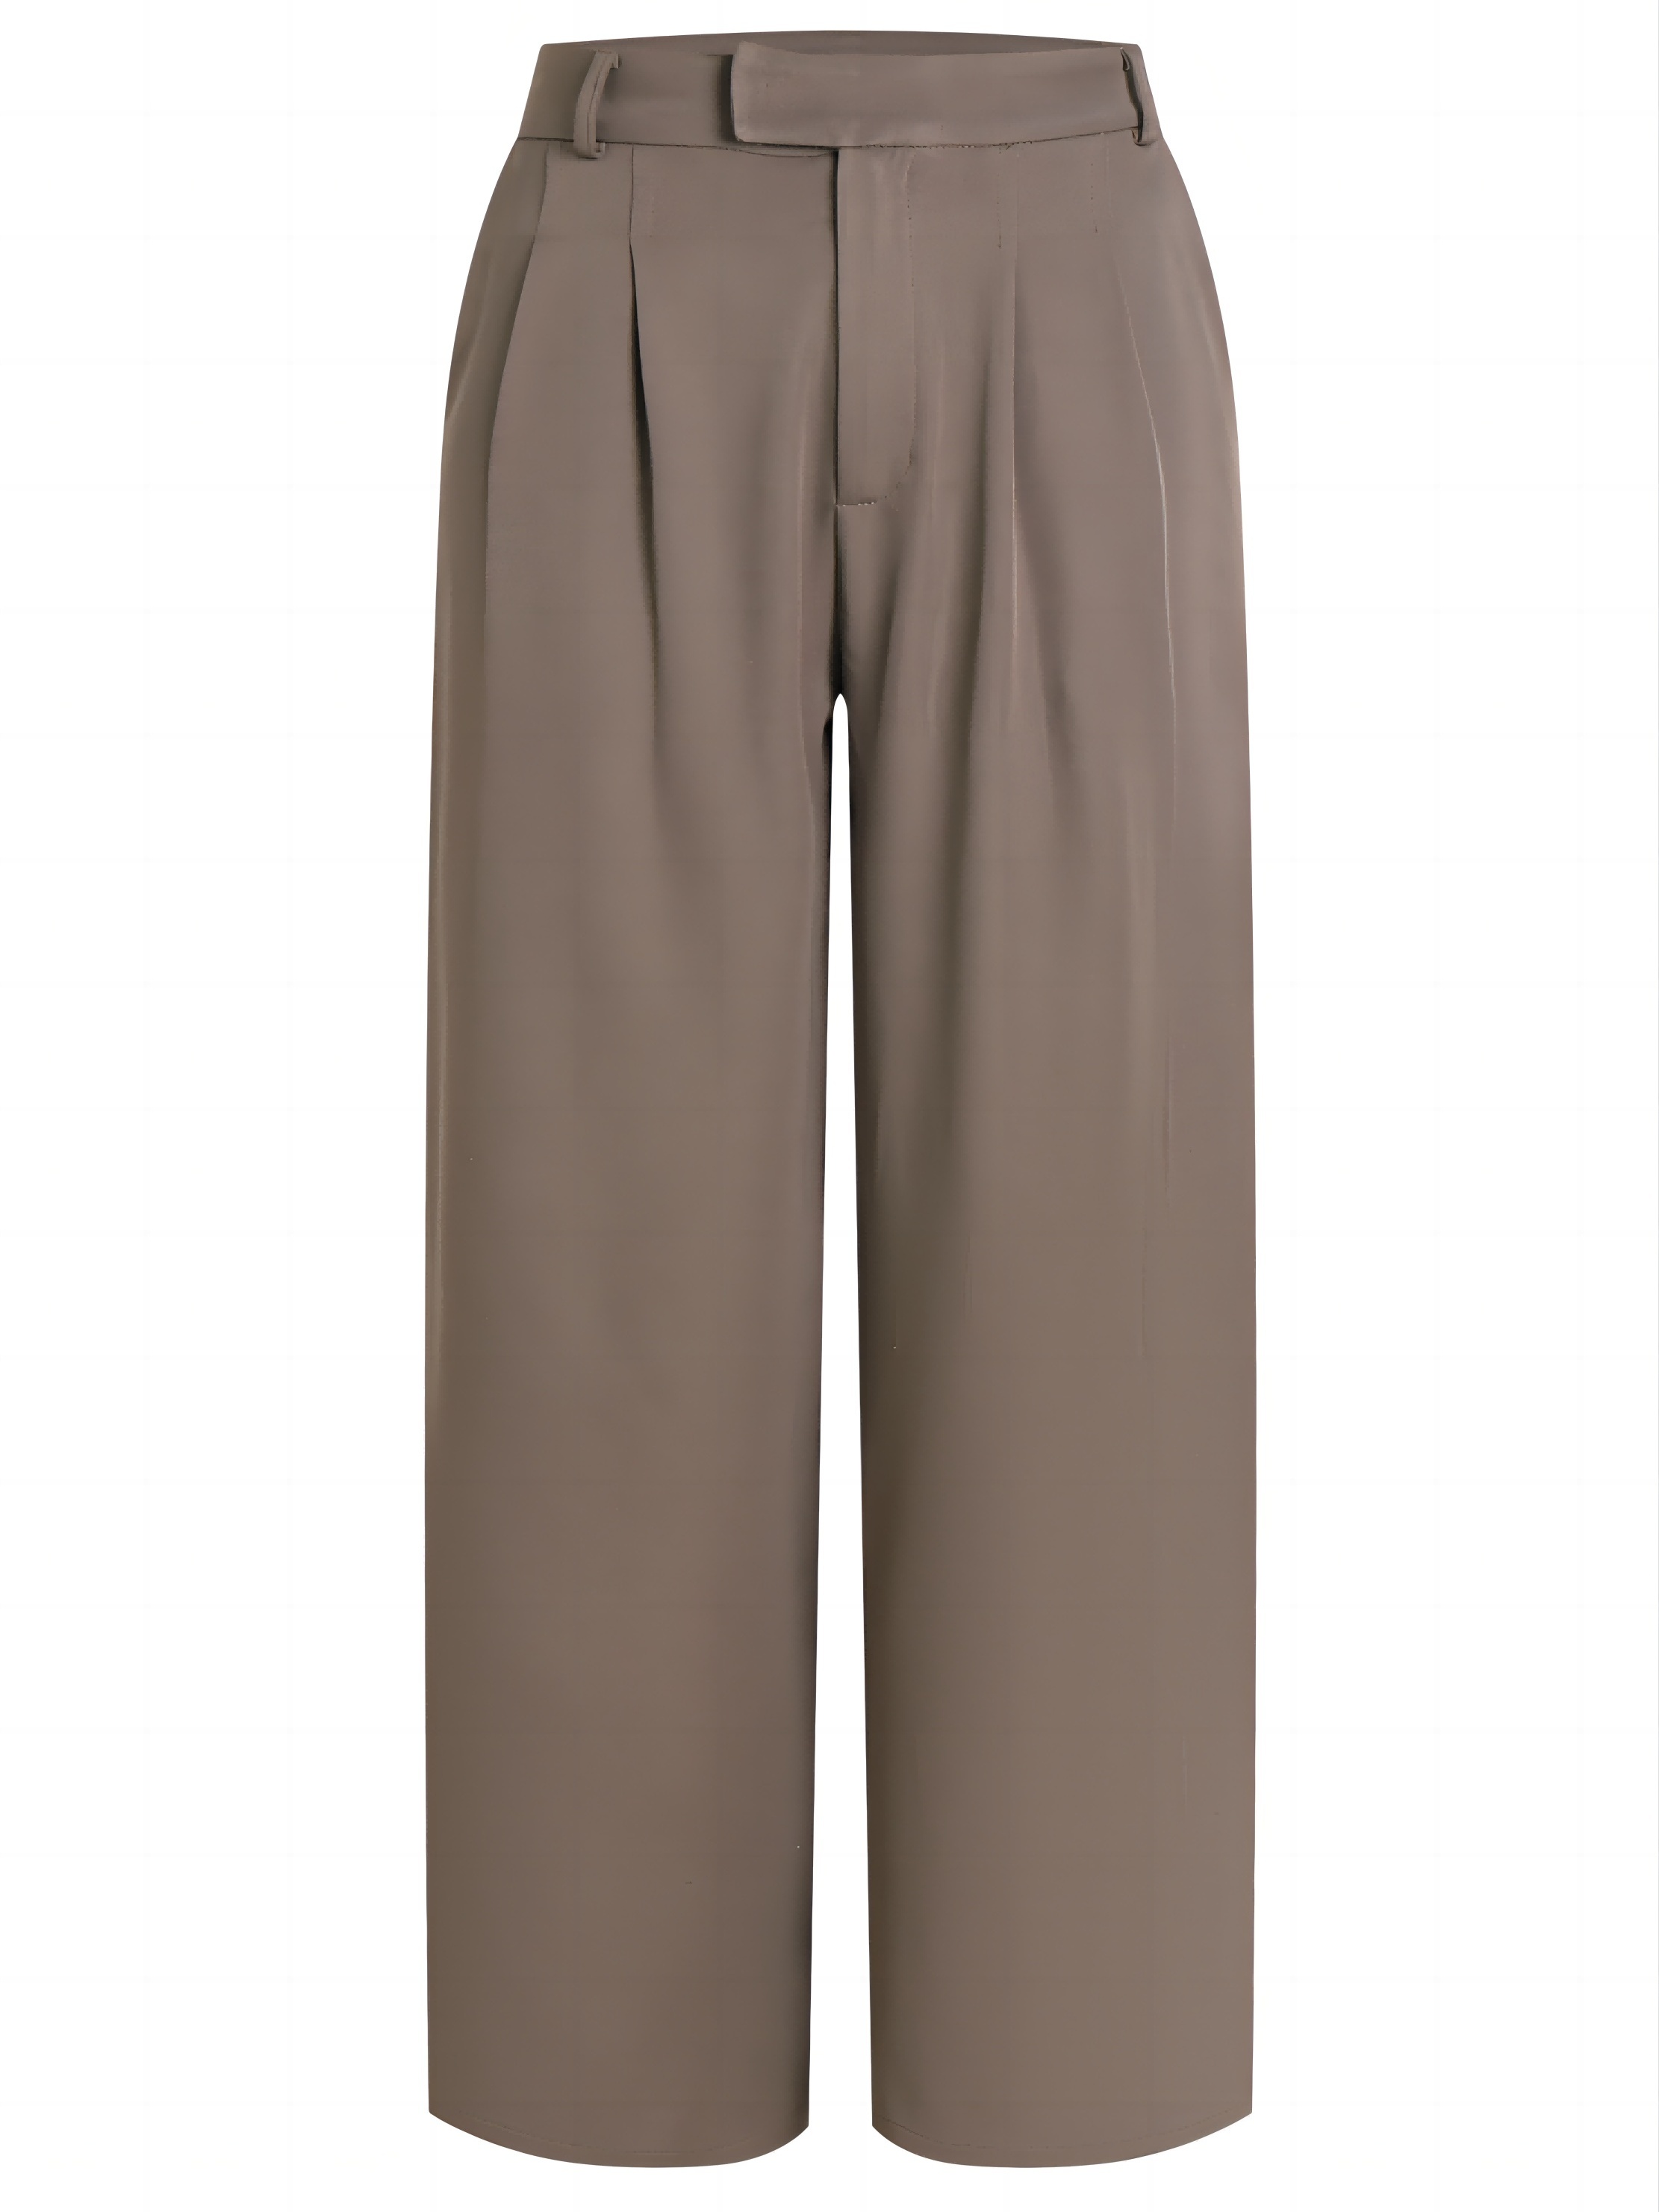 Dress Pants.elegant Khaki Wide Leg Pants For Women - High Waist Office  Trousers